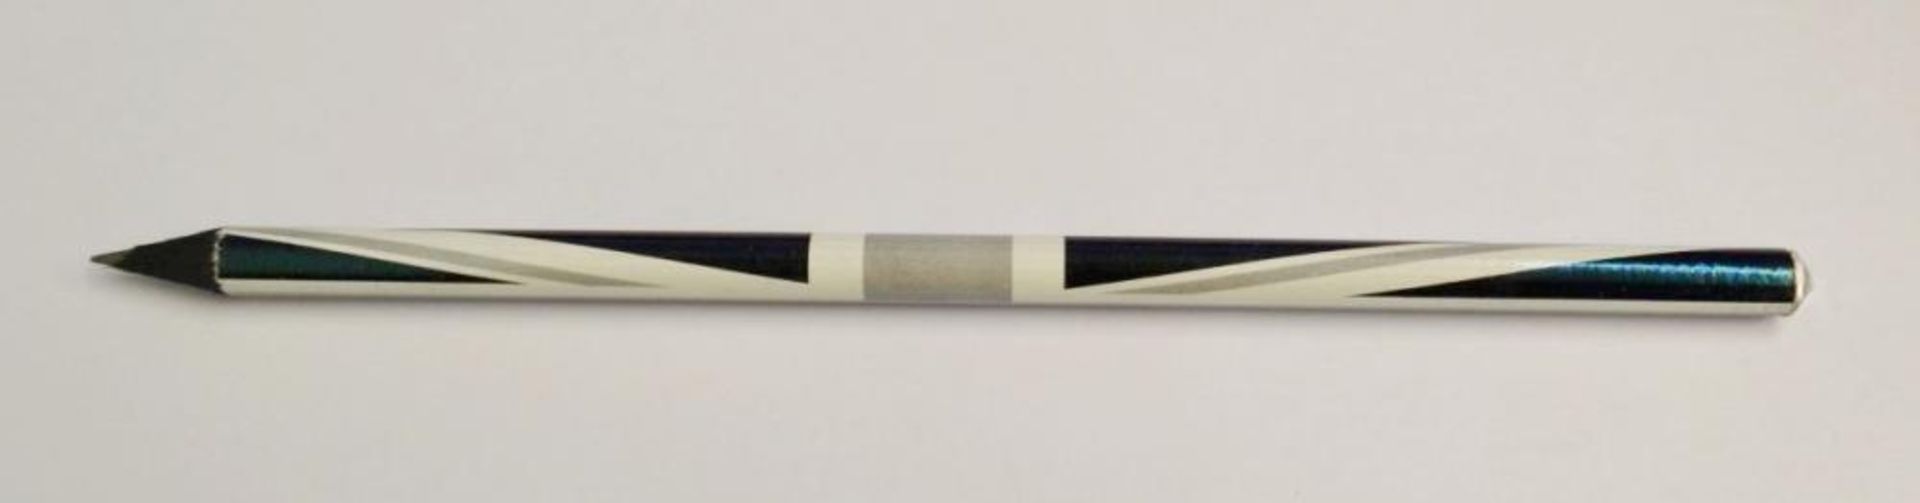 140 x ICE London "Union Jack" Pencils - Made With SWAROVSKI® ELEMENTS - Colour: Black - New / Sealed - Image 4 of 4